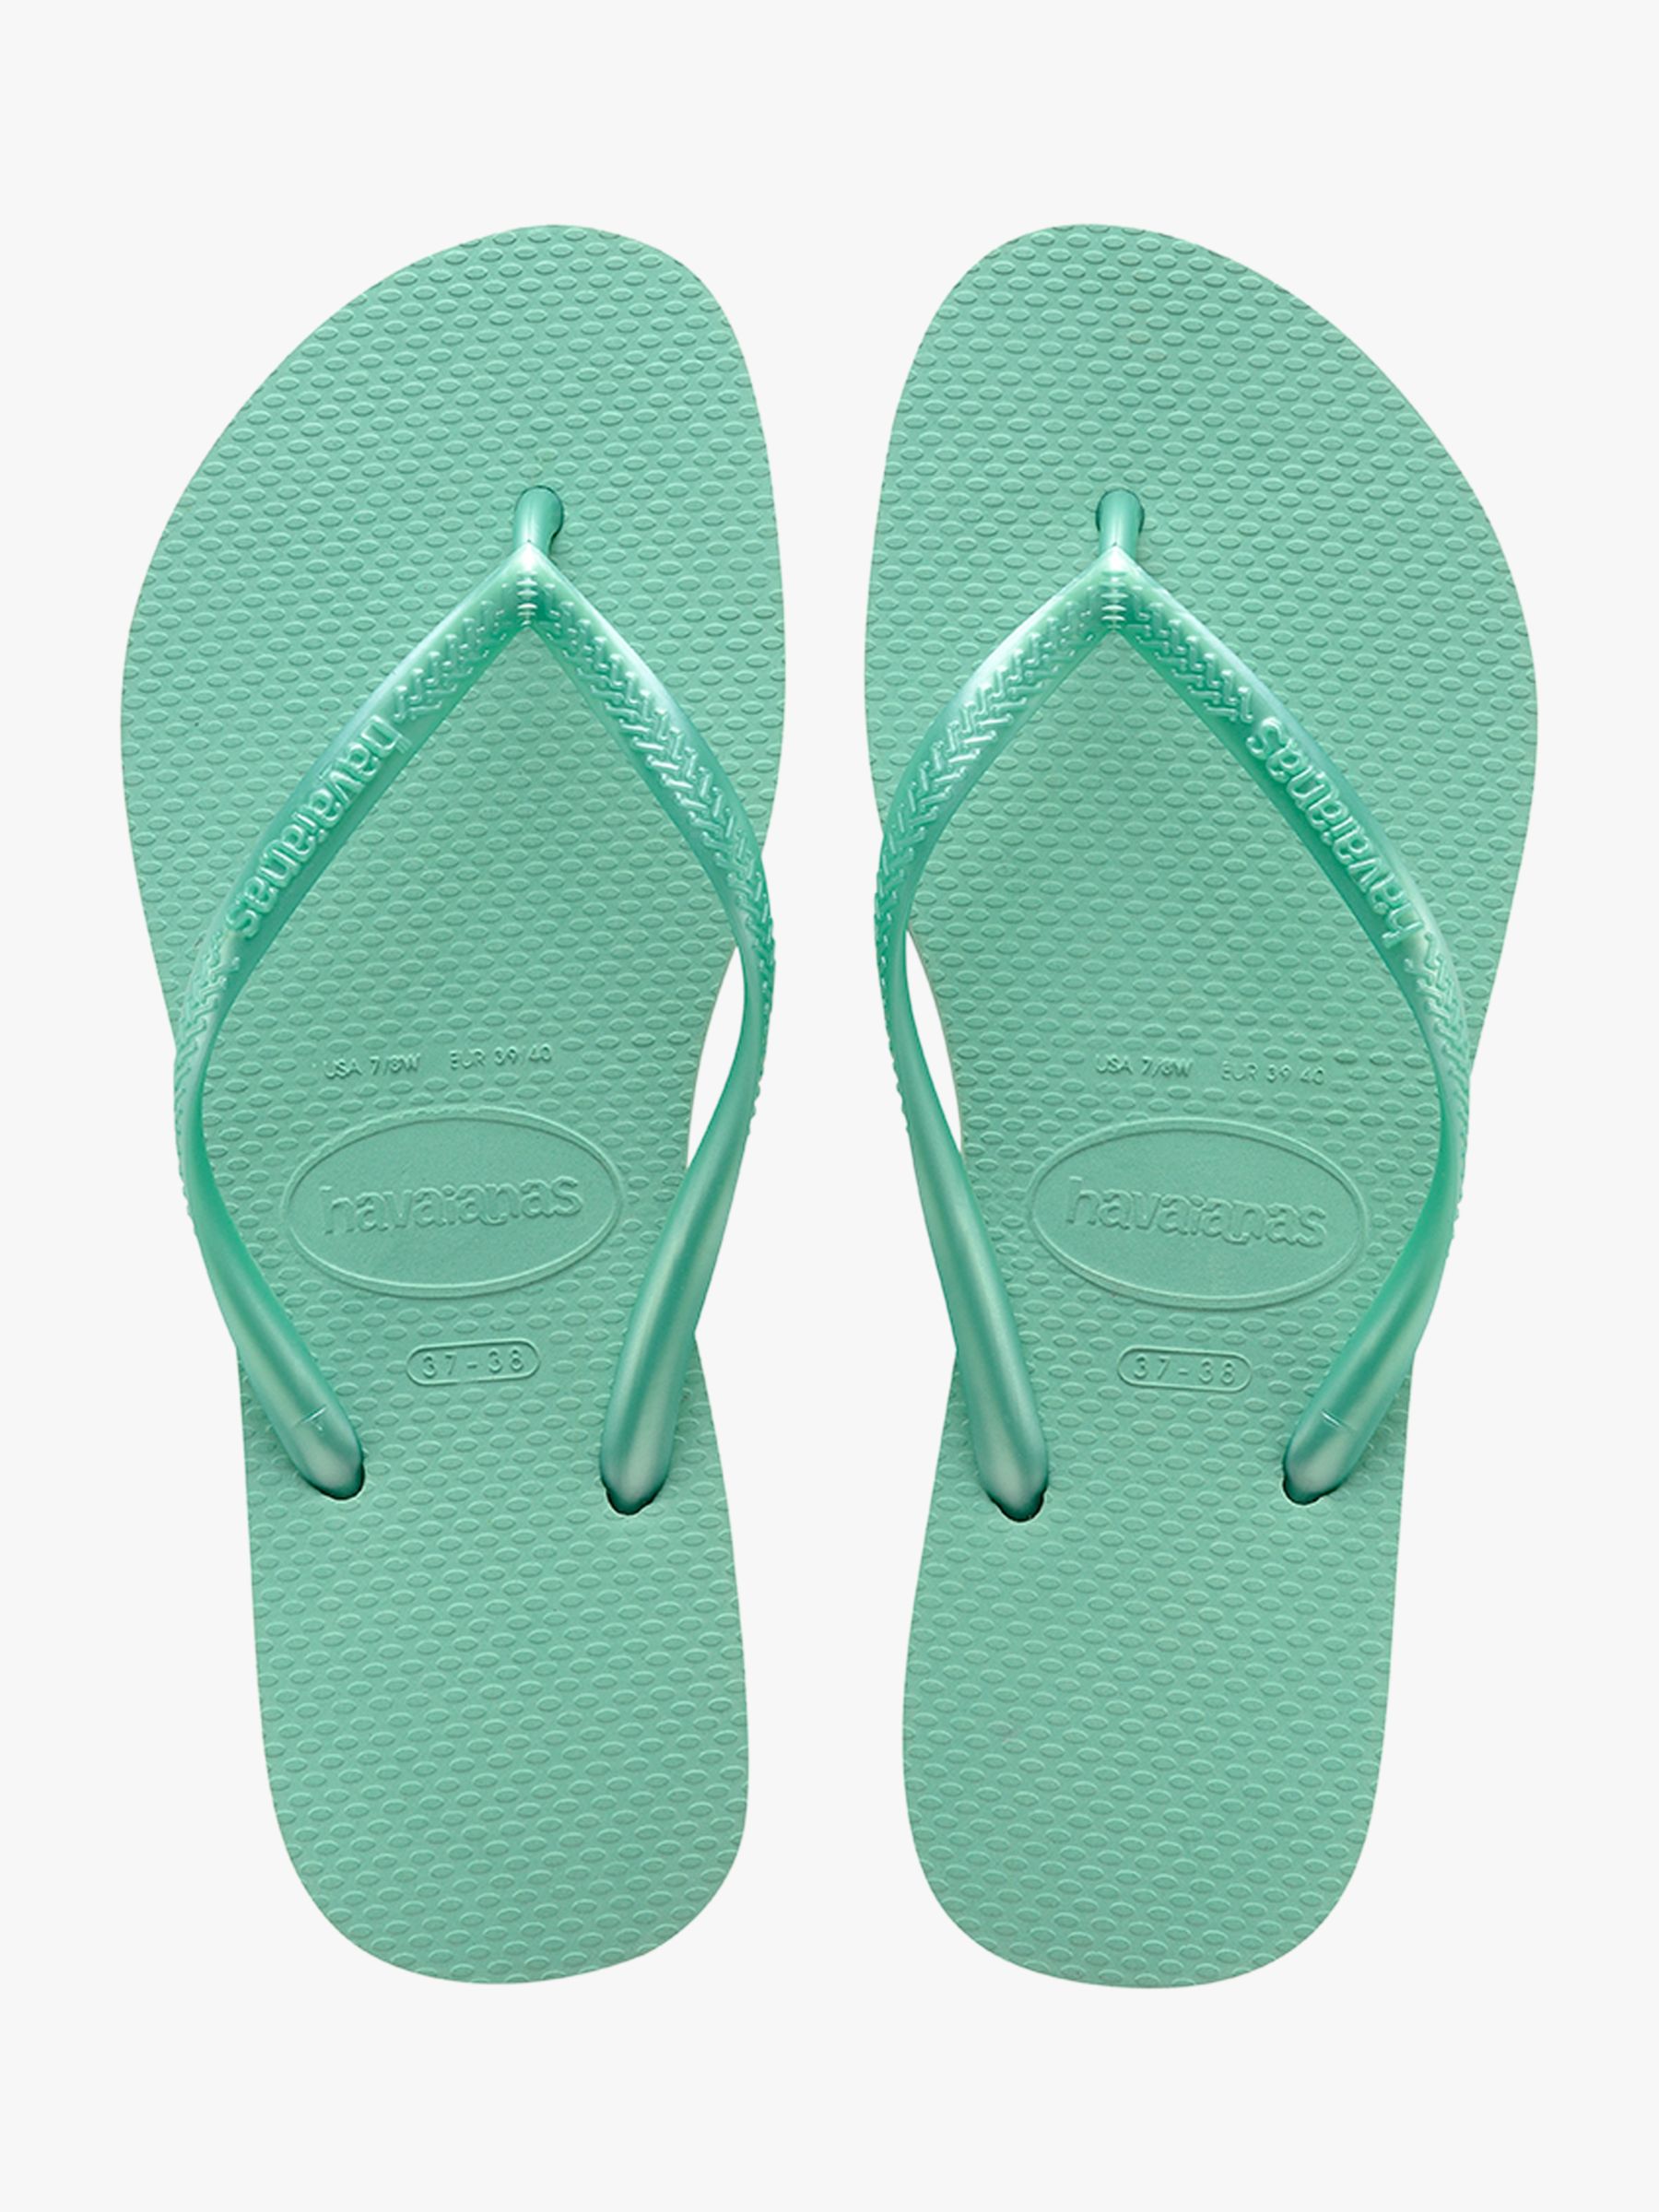 sandals similar to tevas